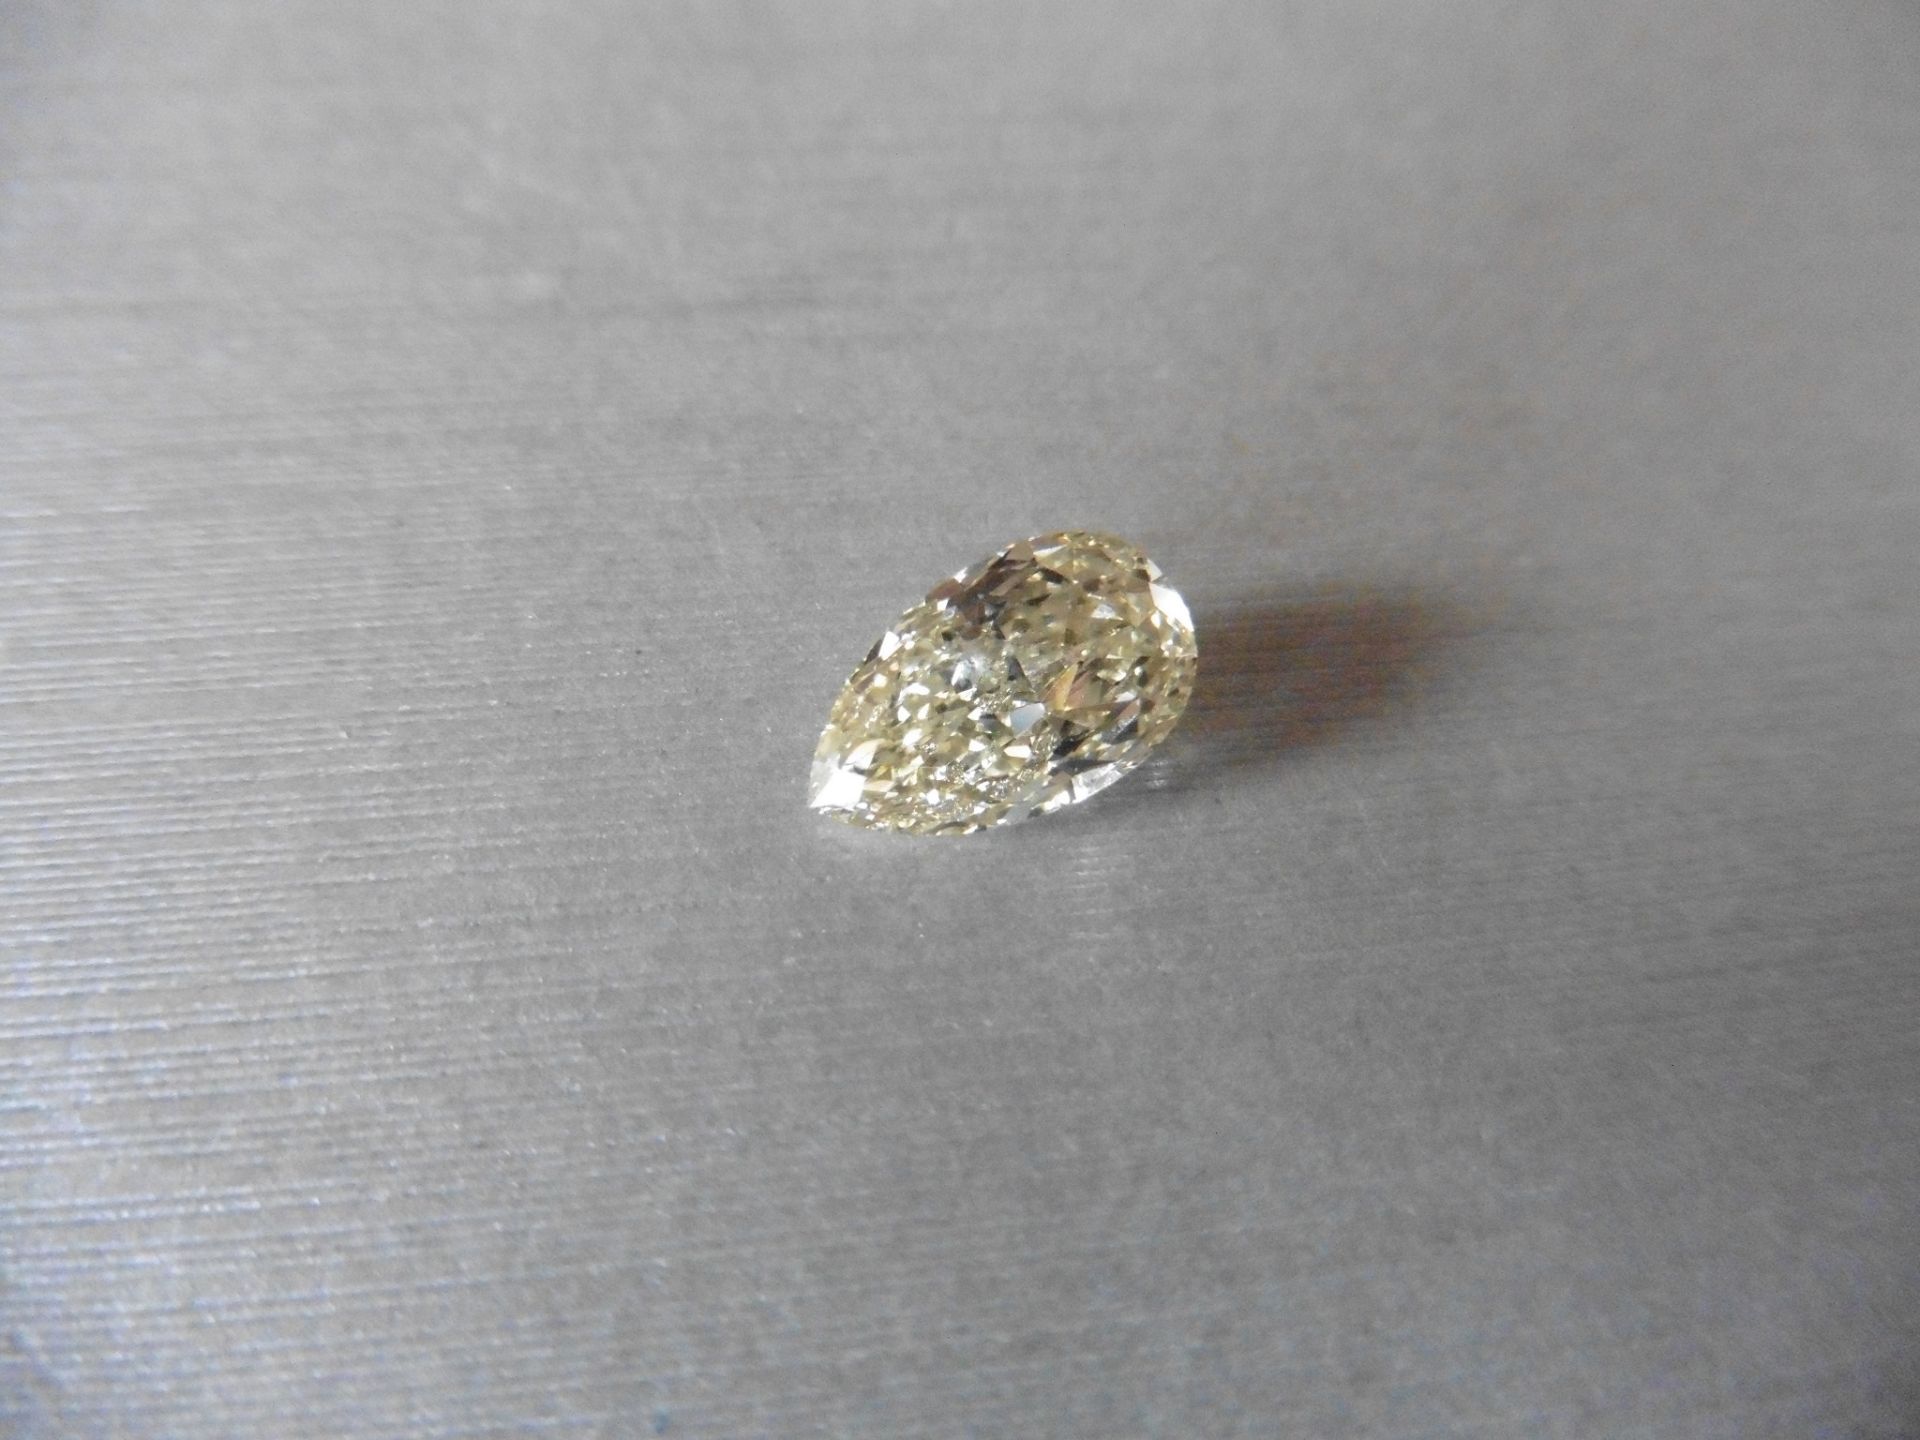 2.14ct single pear shaped diamond, fancy yellow, VVS1 clarity. Measures 11.05 x 6.70 x 4.08mm. HRD